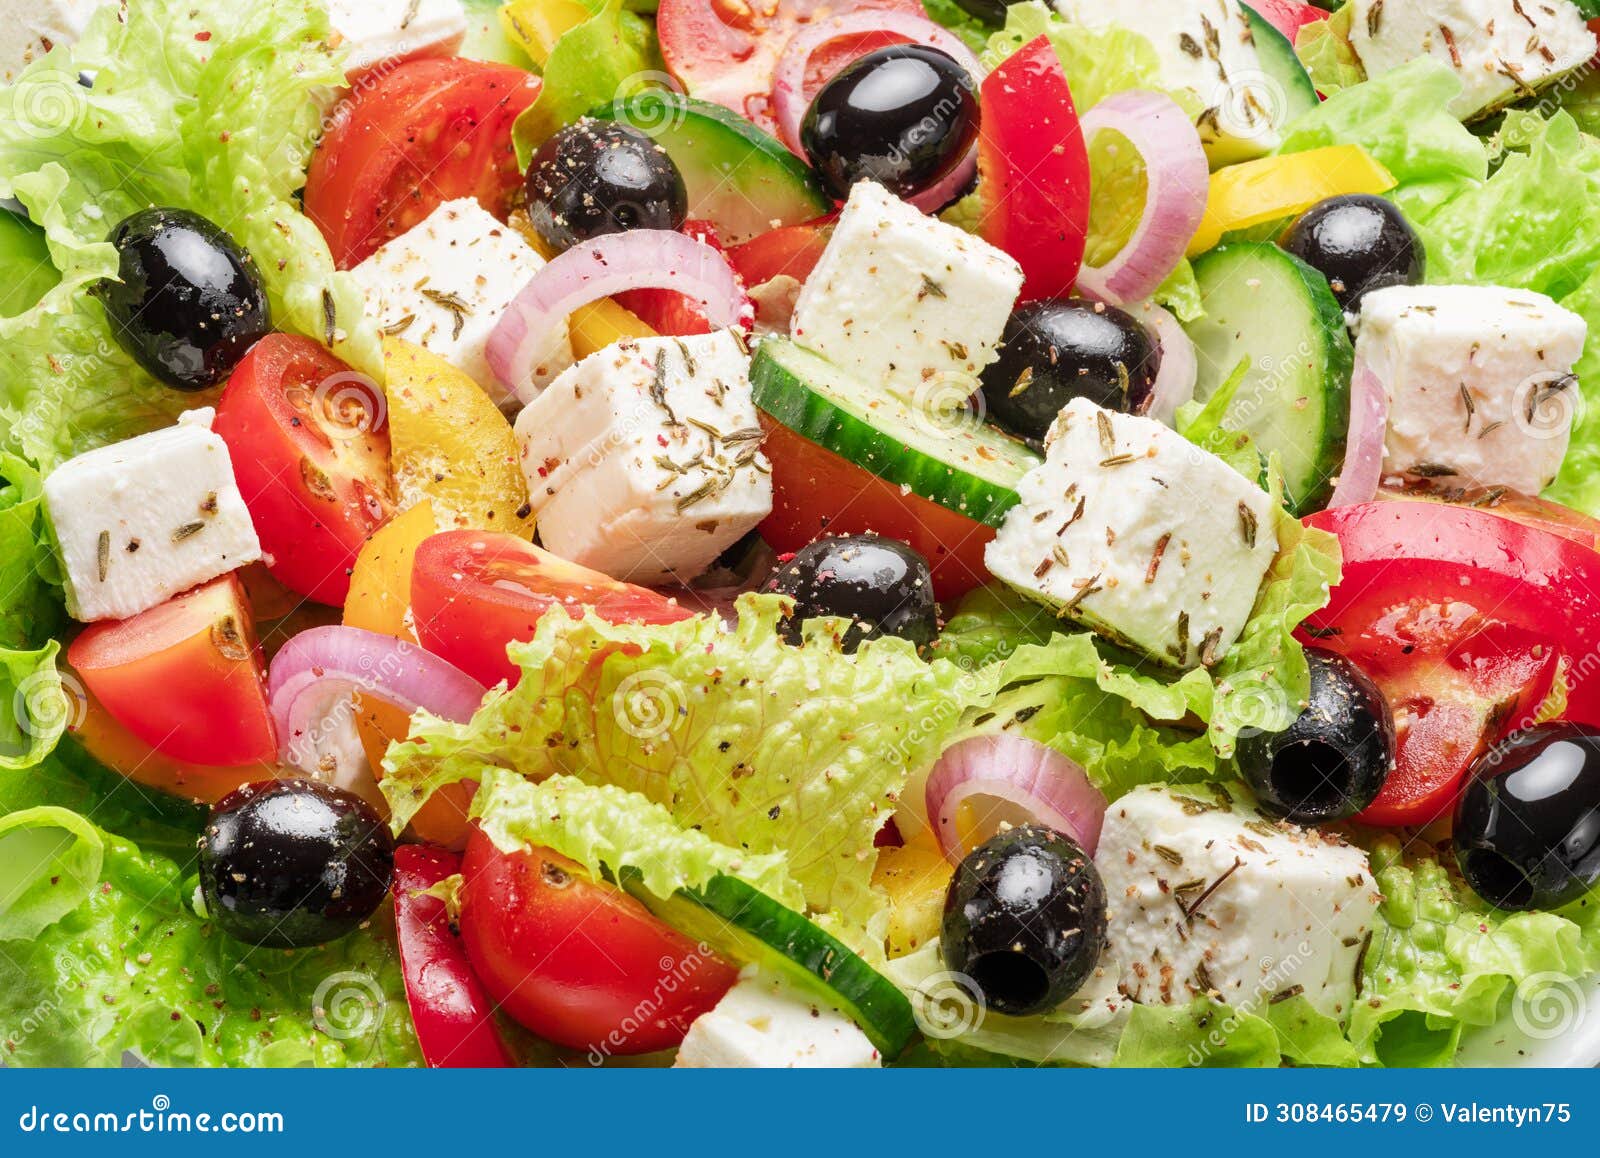 greek salad ingredients close up. tasty food background